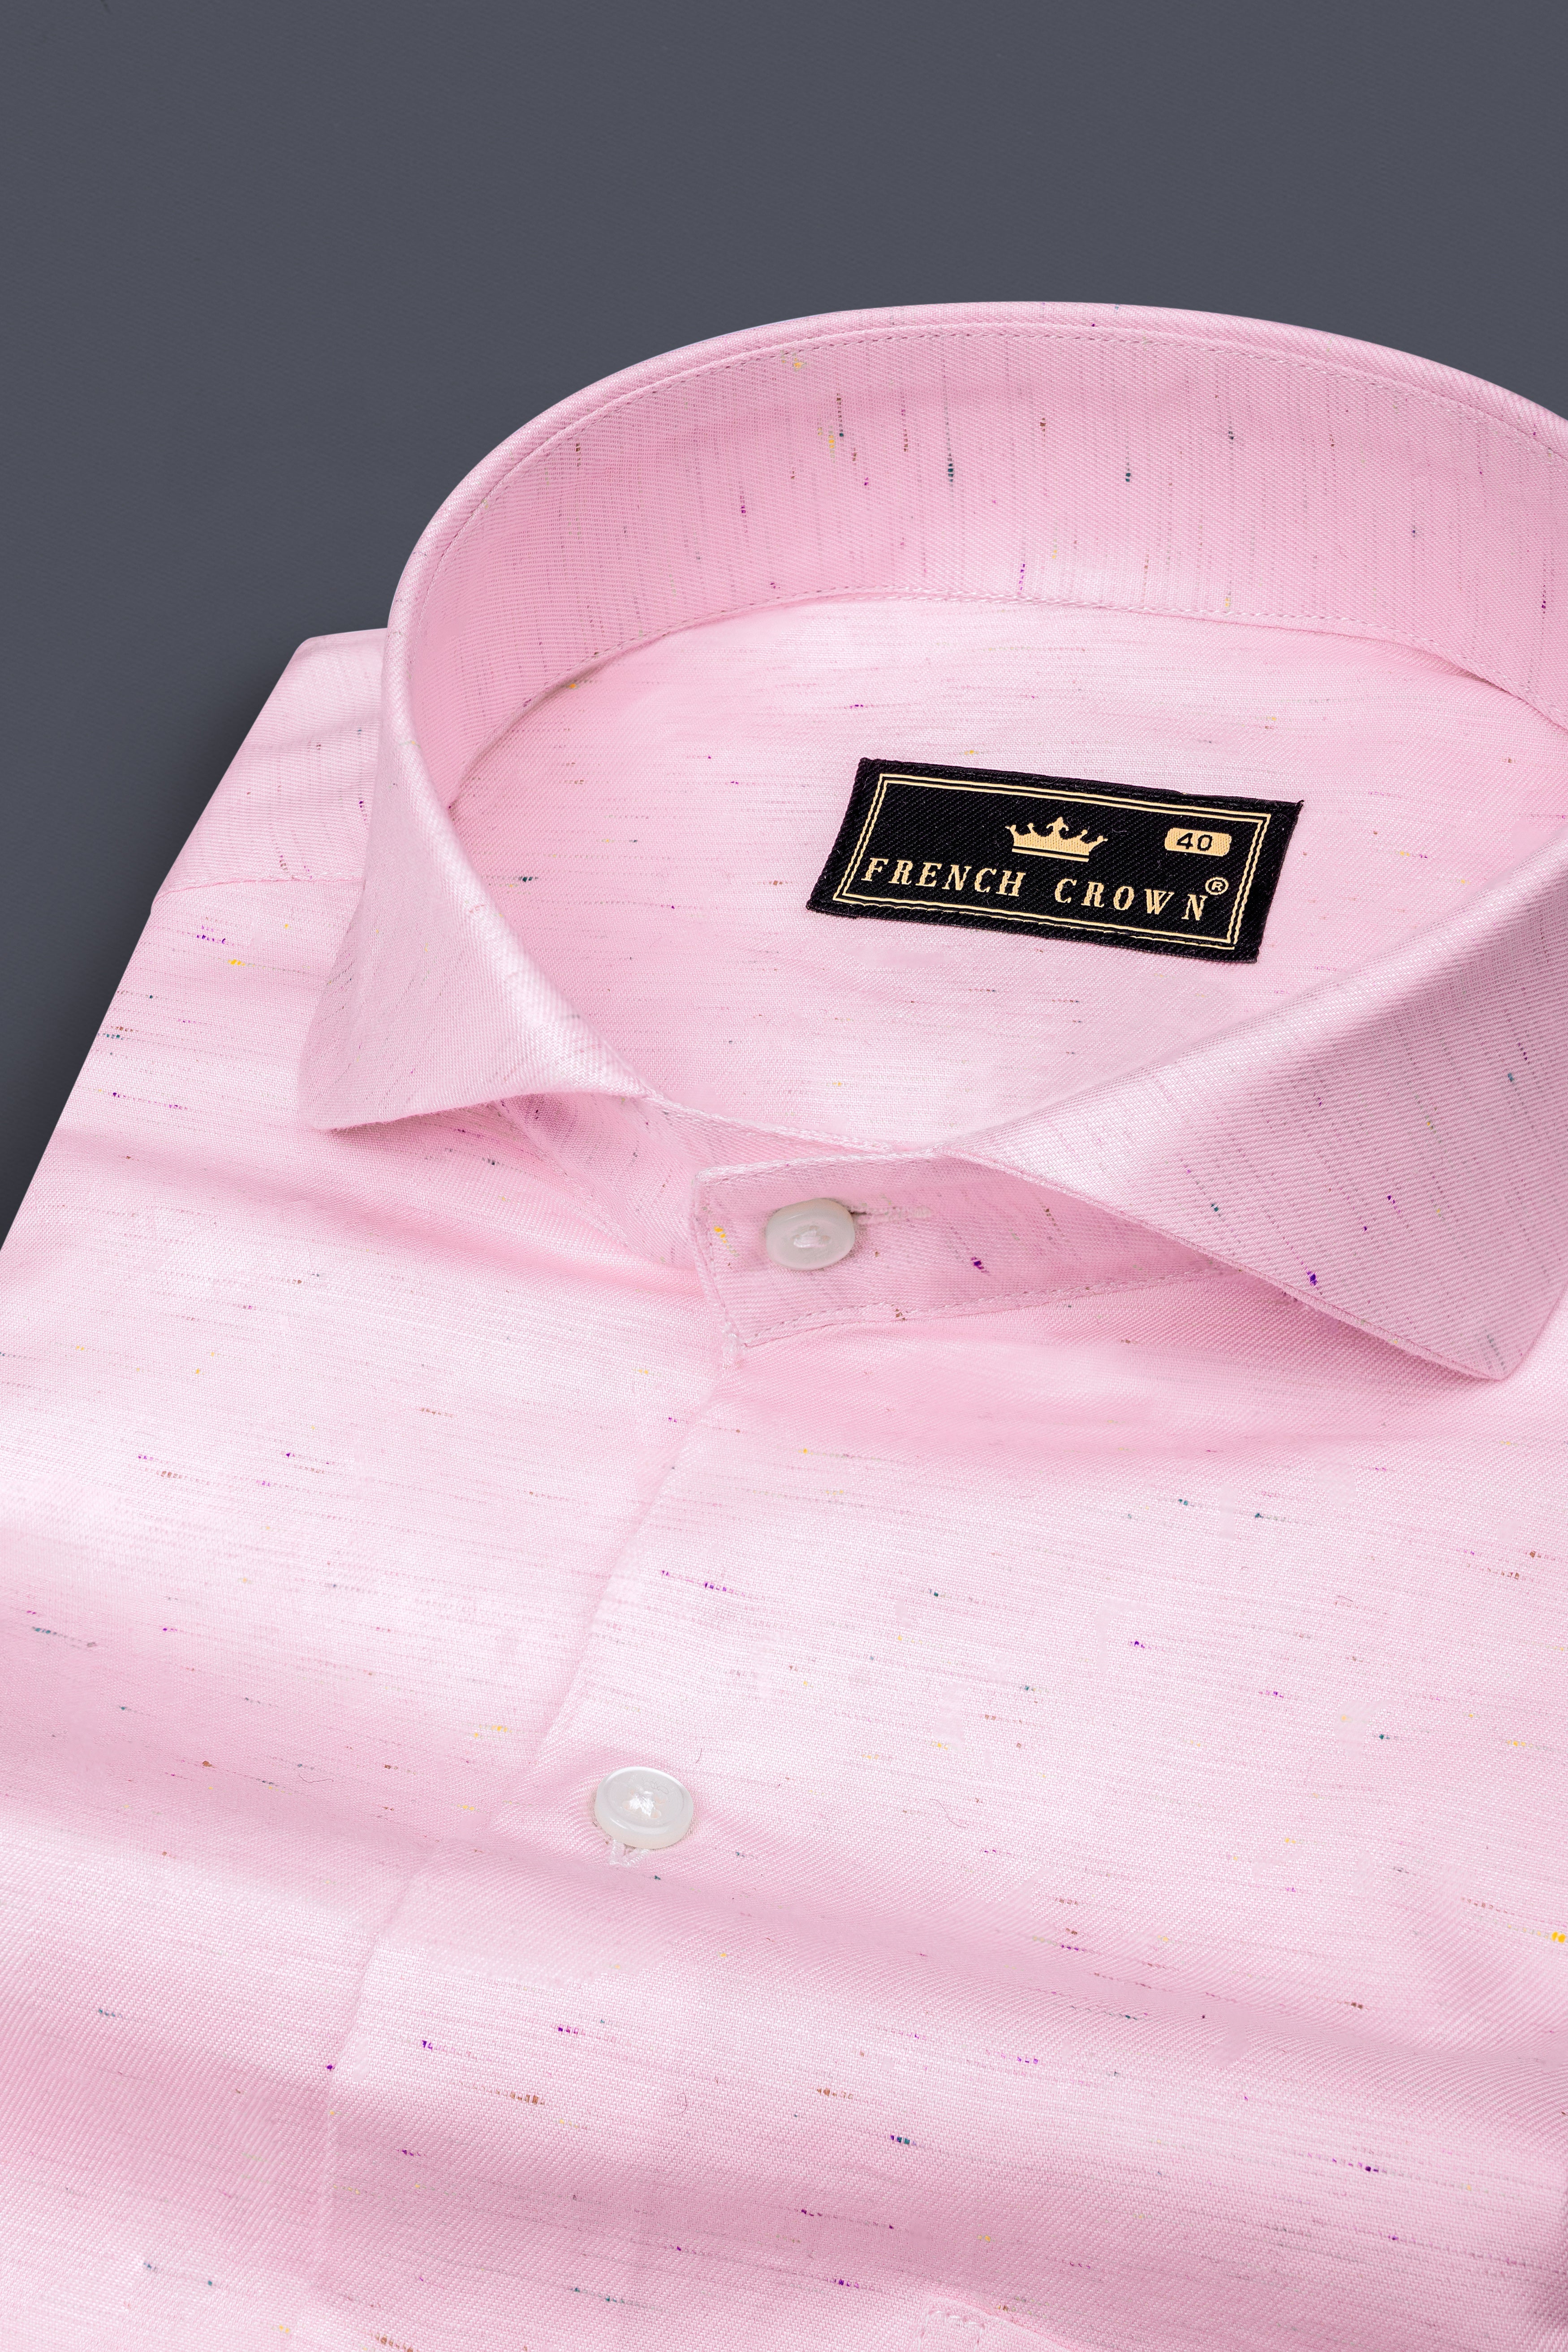 Cherub Pink Textured Chambray Premium Giza Cotton Shirt